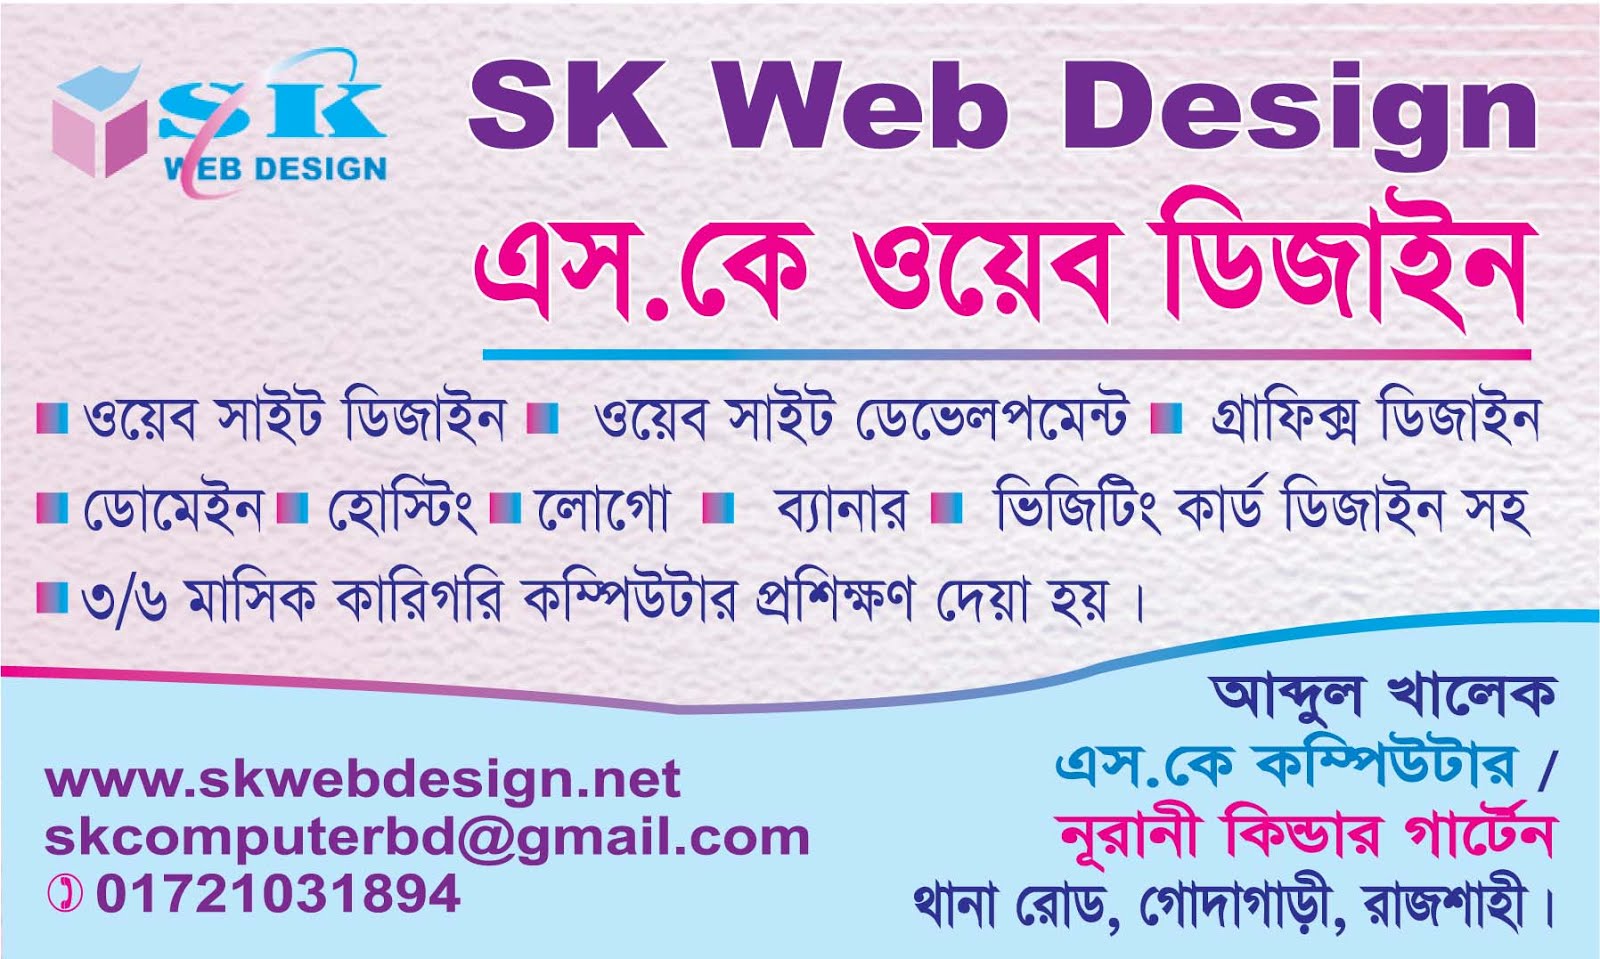 SK Web Design|Advertising